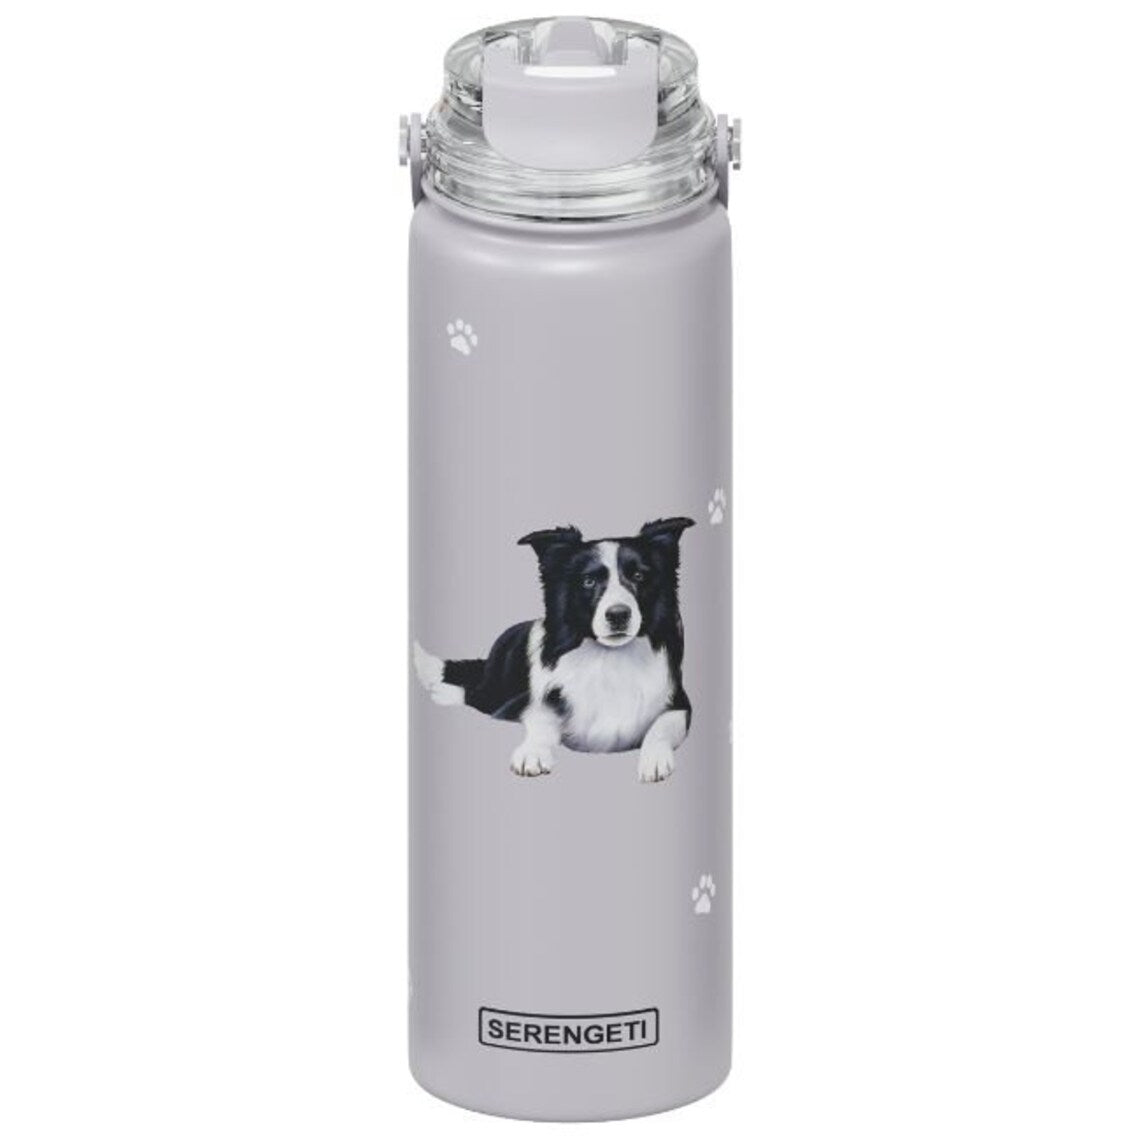 SERENGETI Stainless Steel Water Bottle 24oz - Border Collie